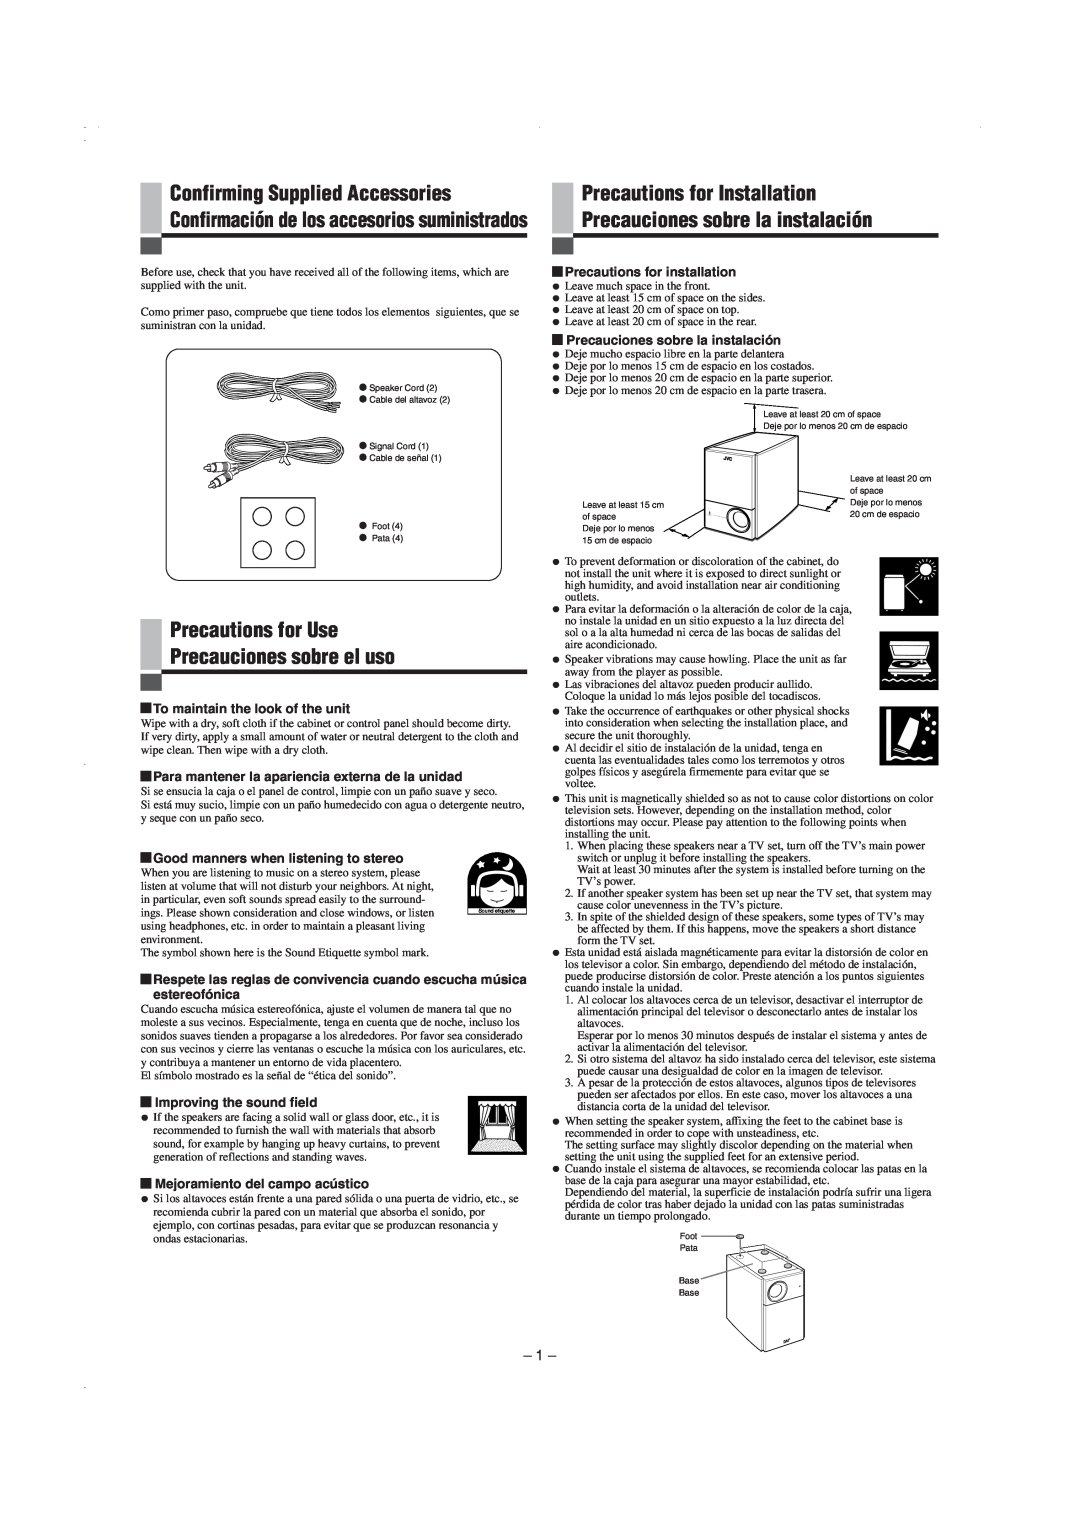 JVC SP-PW105WD manual Confirming Supplied Accessories, Precautions for Use Precauciones sobre el uso 